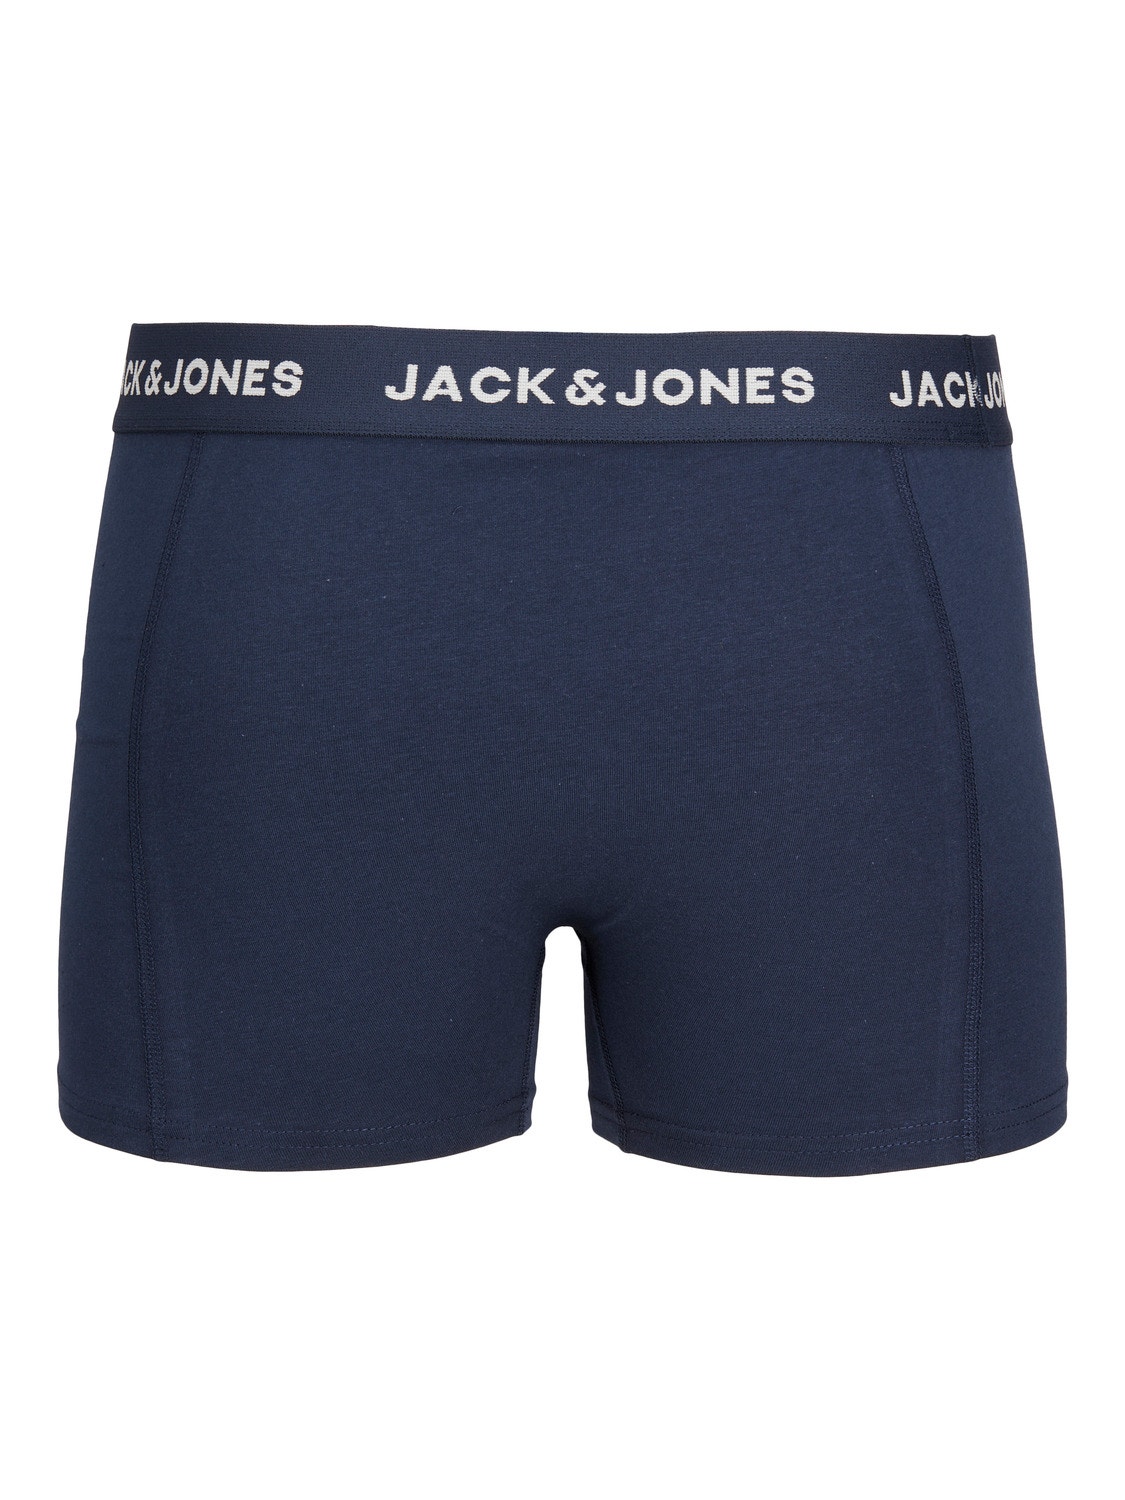 Jack & Jones 3 Trunks -Blue Nights - 12171946